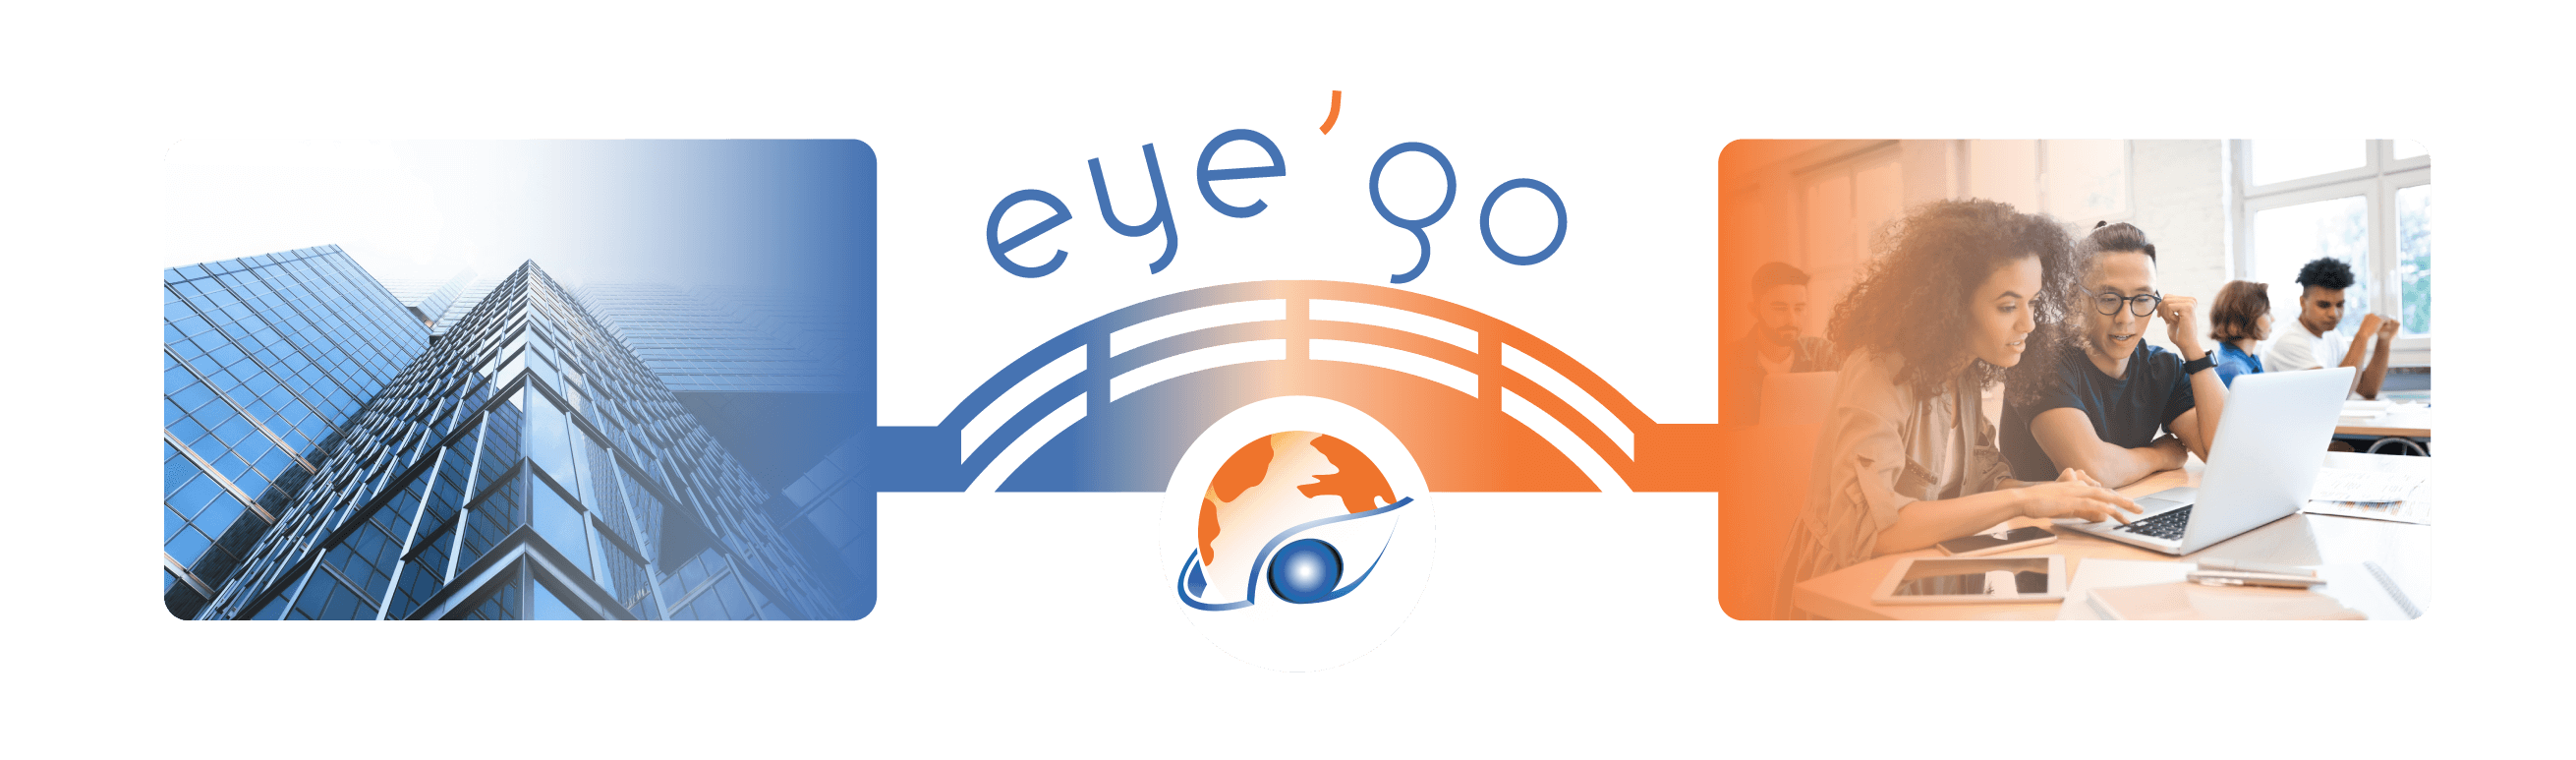 eye go relation professionnel formation